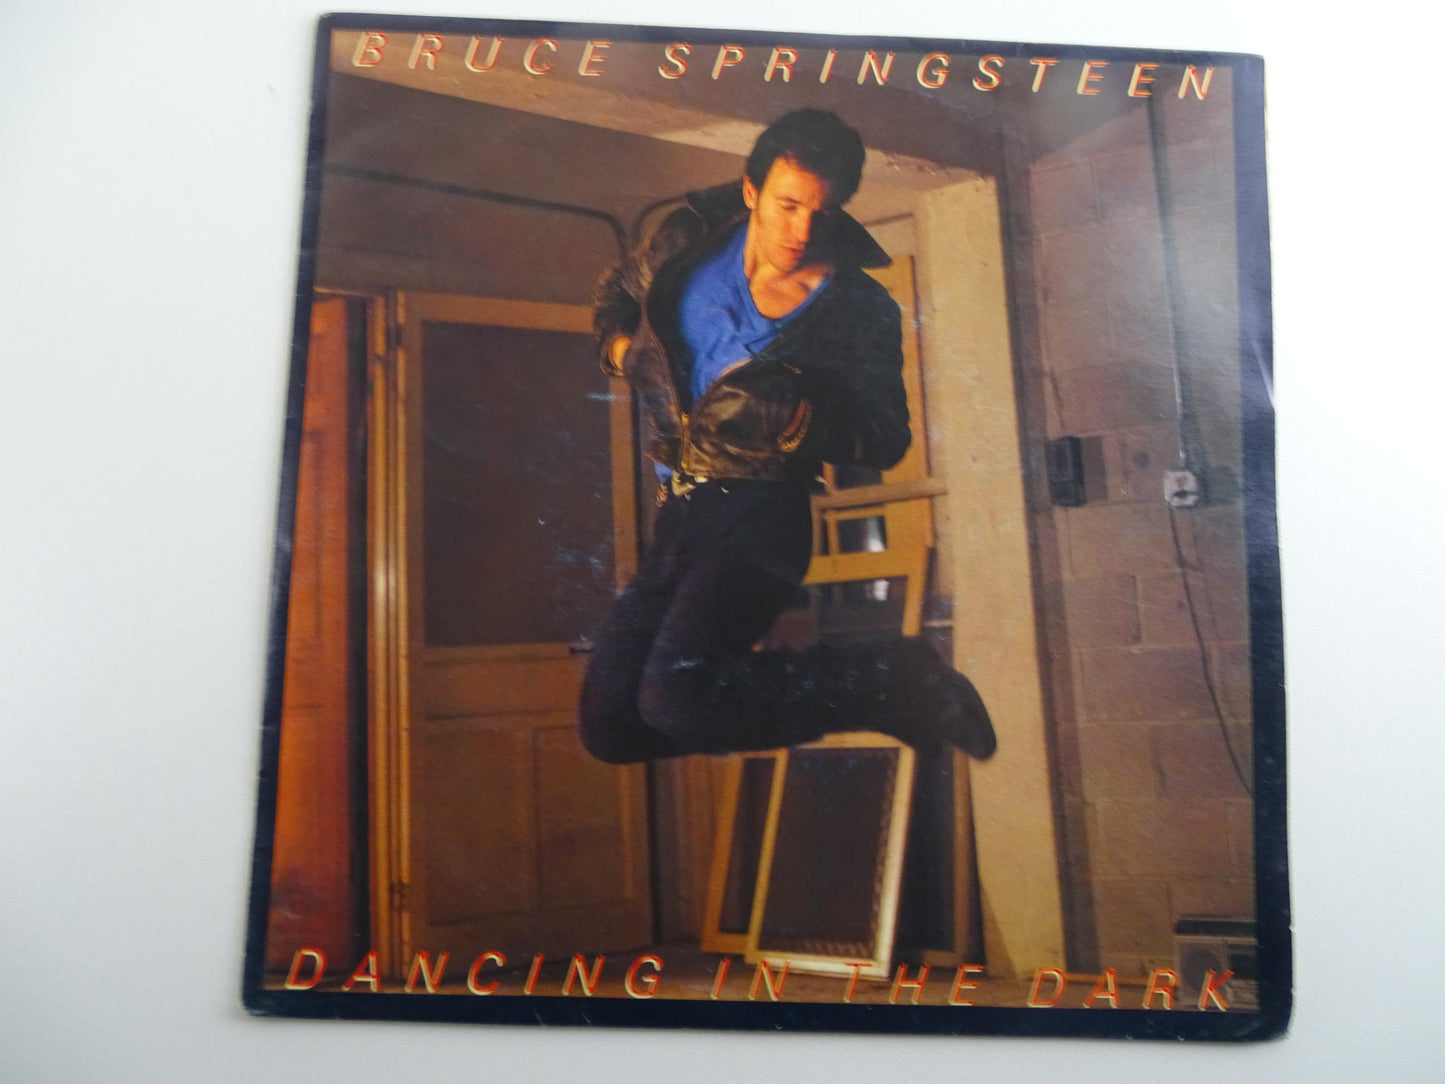 Single, Bruce Springsteen: Dancing In The Dark, 1984